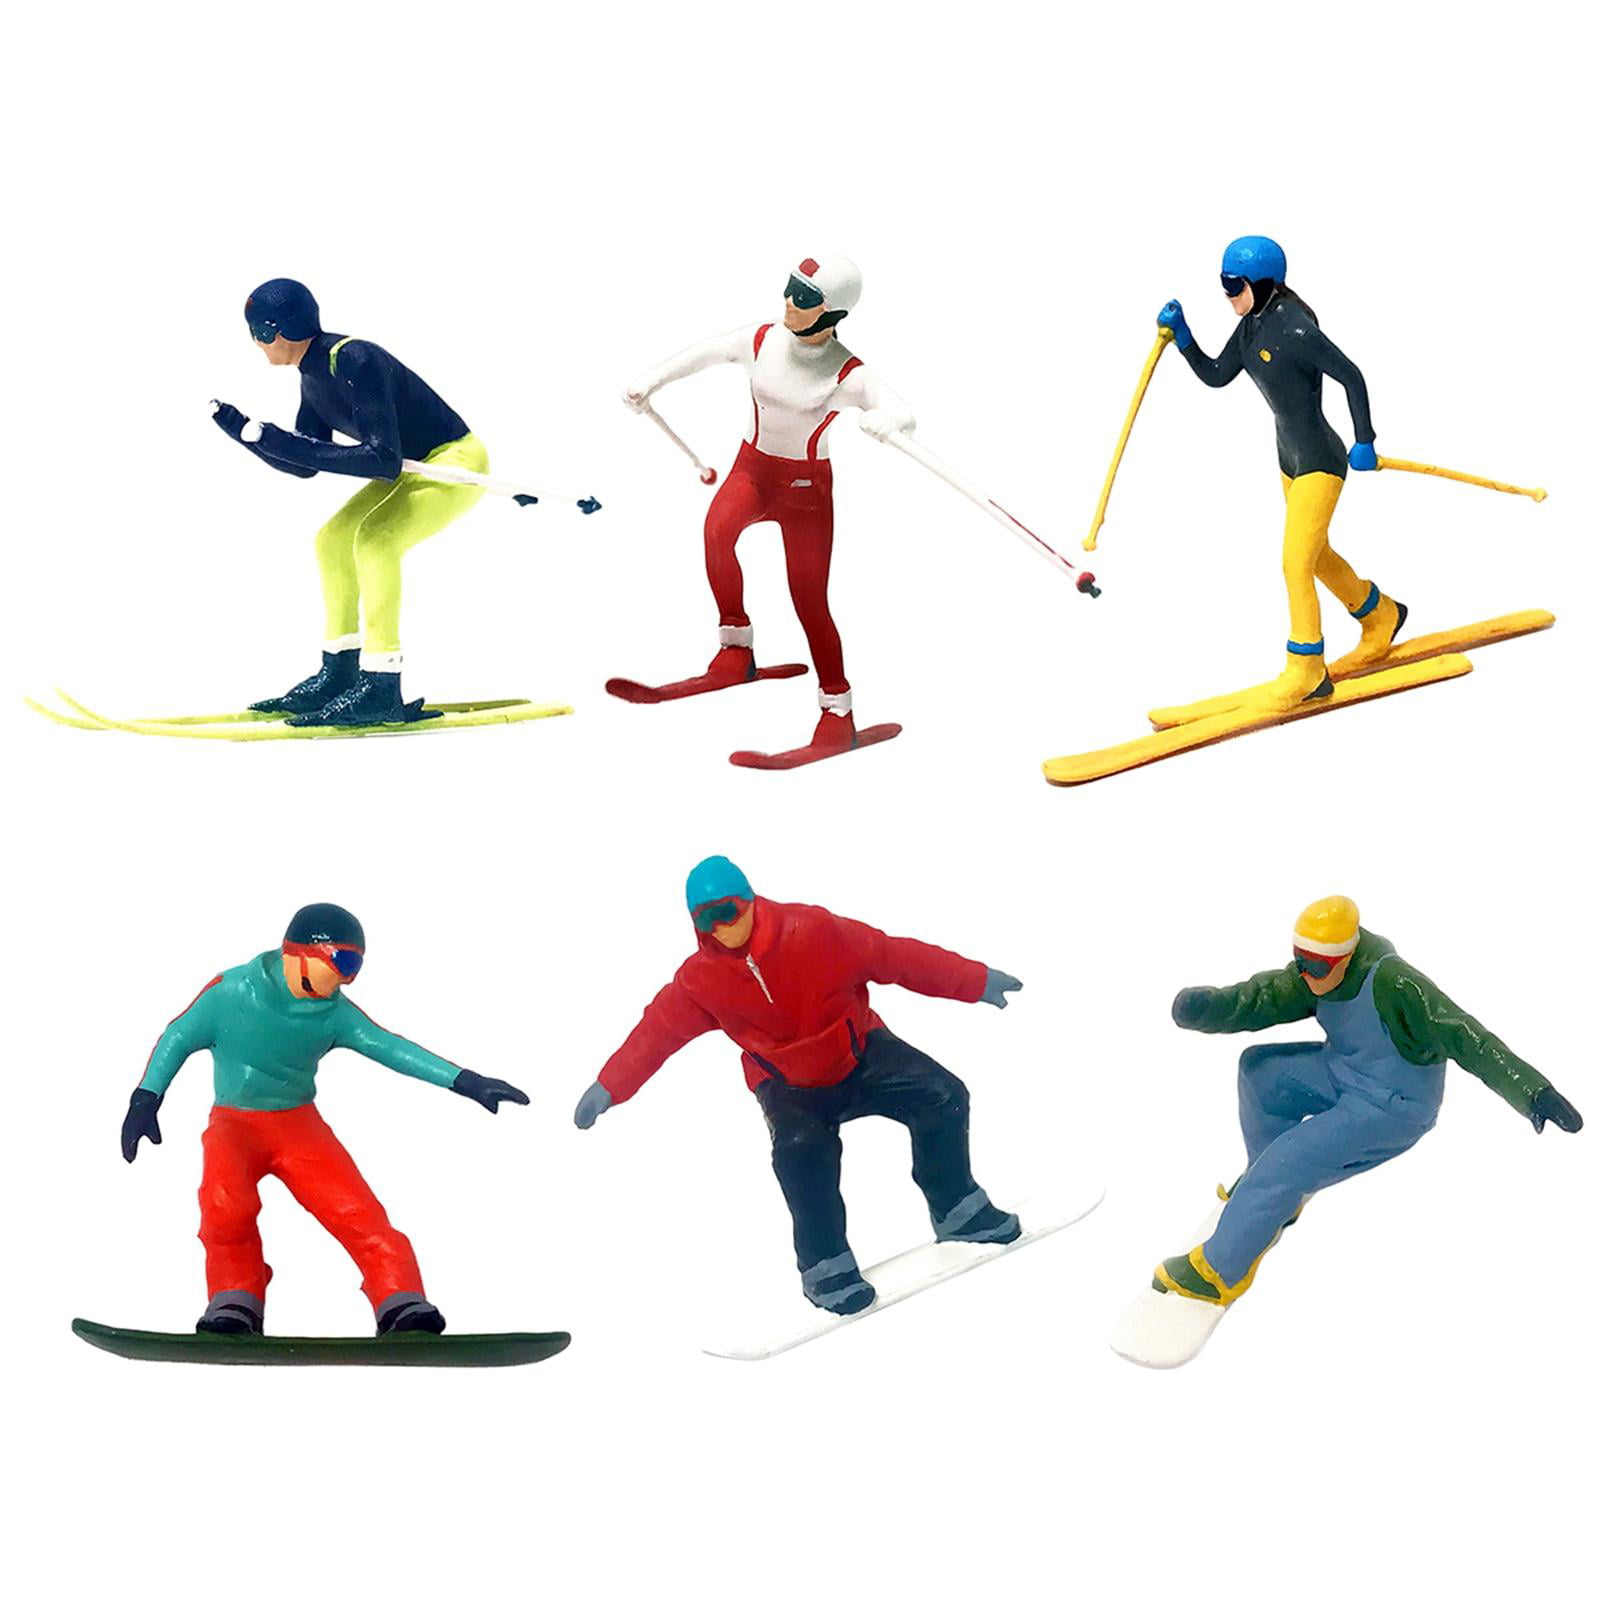 1:64 Painted Figure Mini Model Miniature Resin Diorama Ski Snowboarding  Skiers